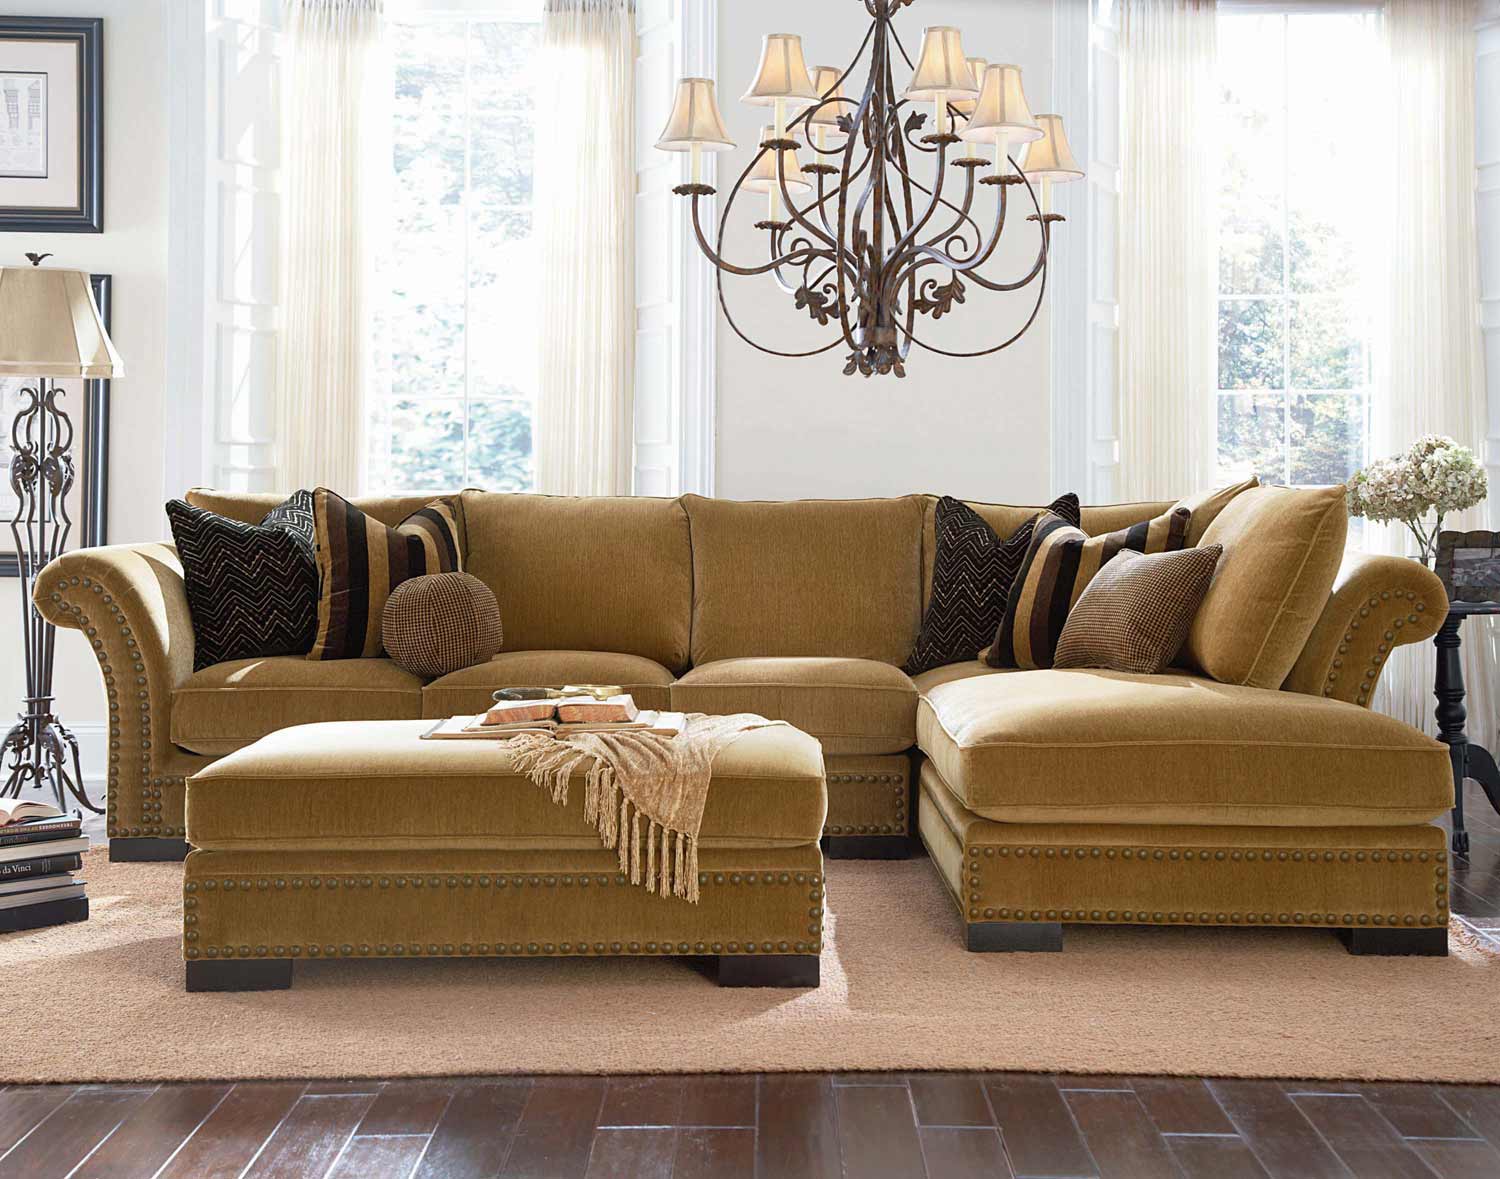 Chelsea Home Wagner Sectional Sofa Set - Venice Burlap